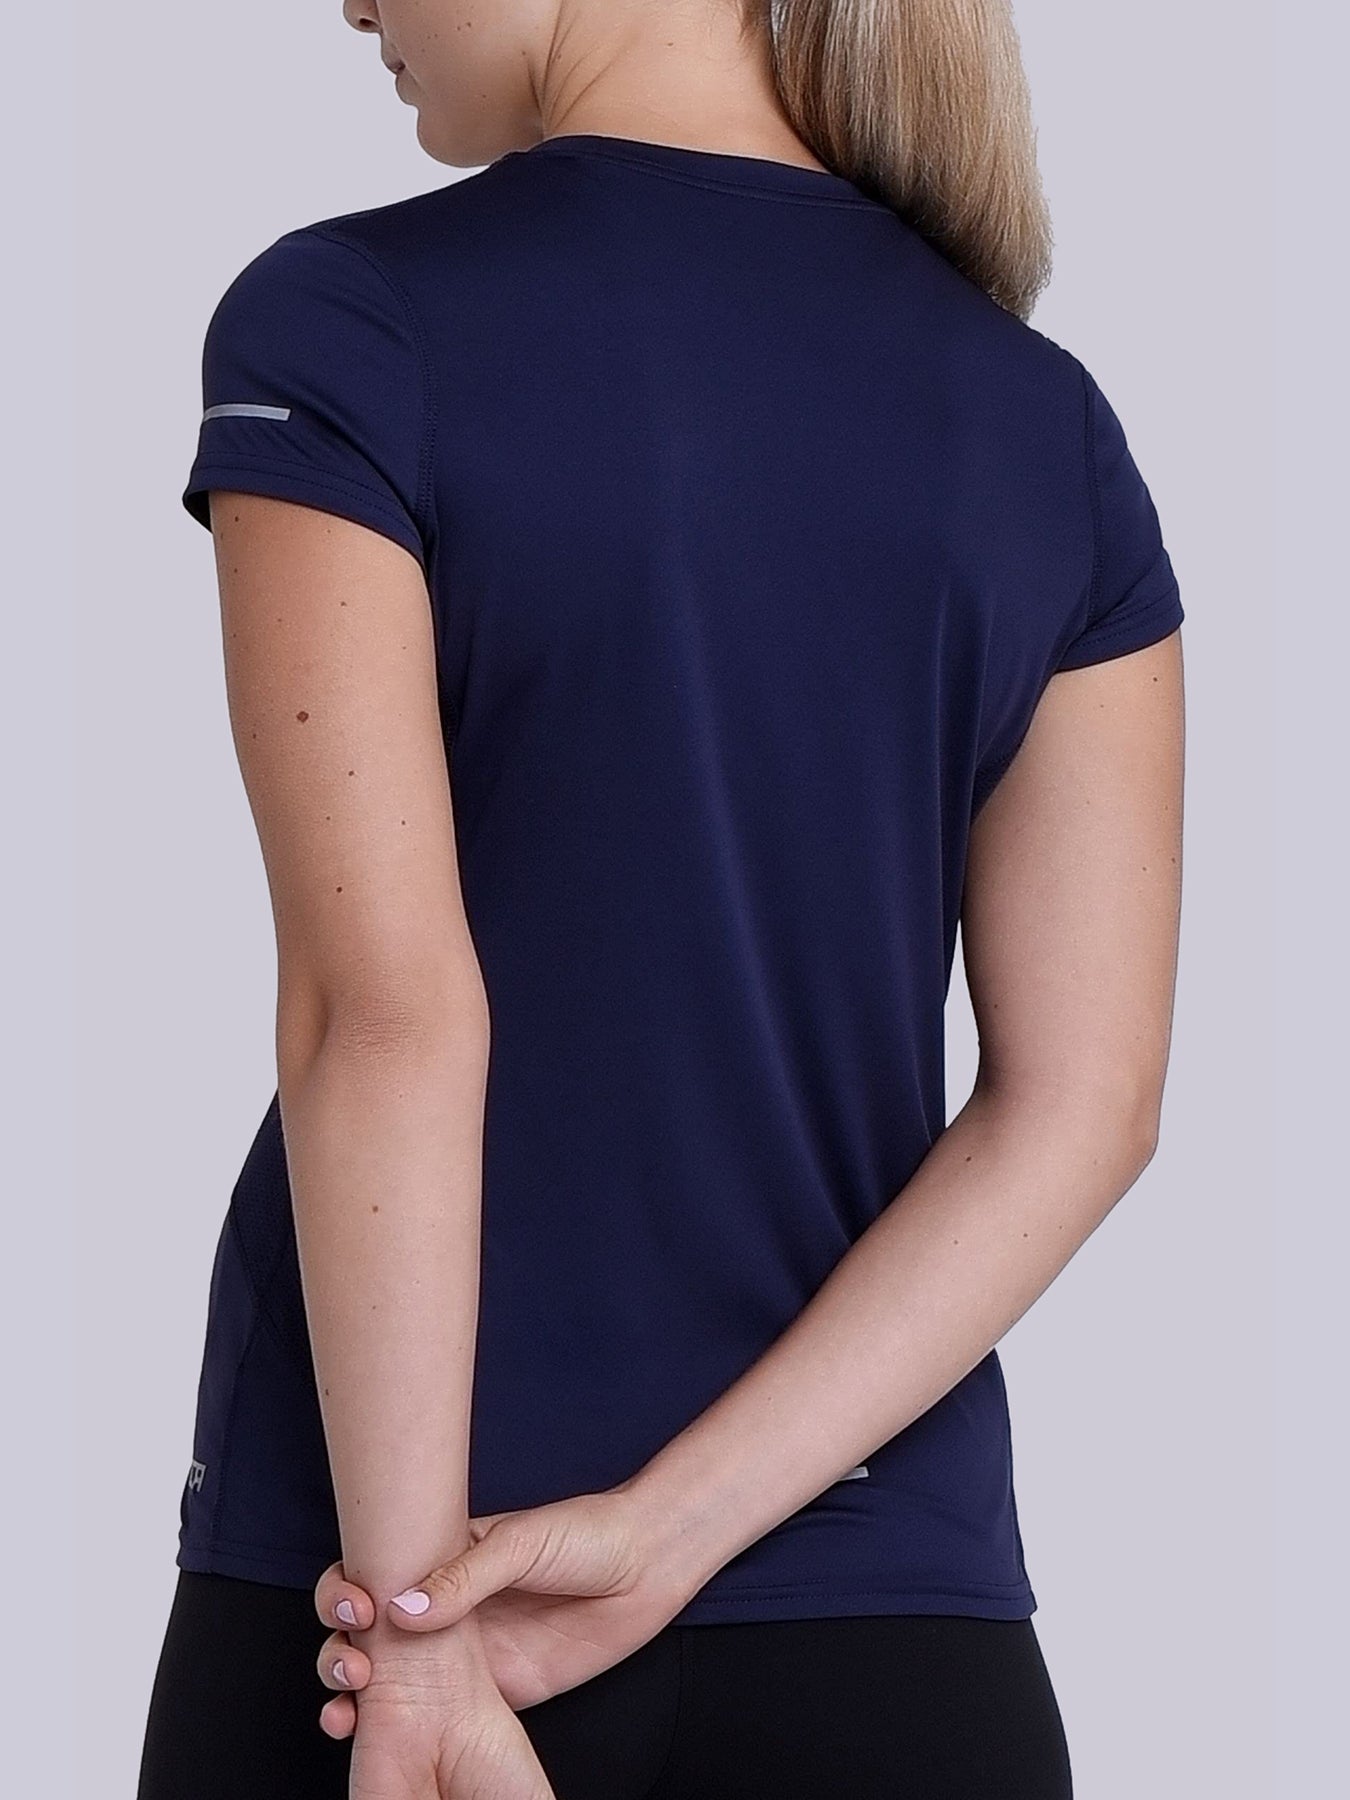 Atomic Short Sleeve T-Shirt For Women